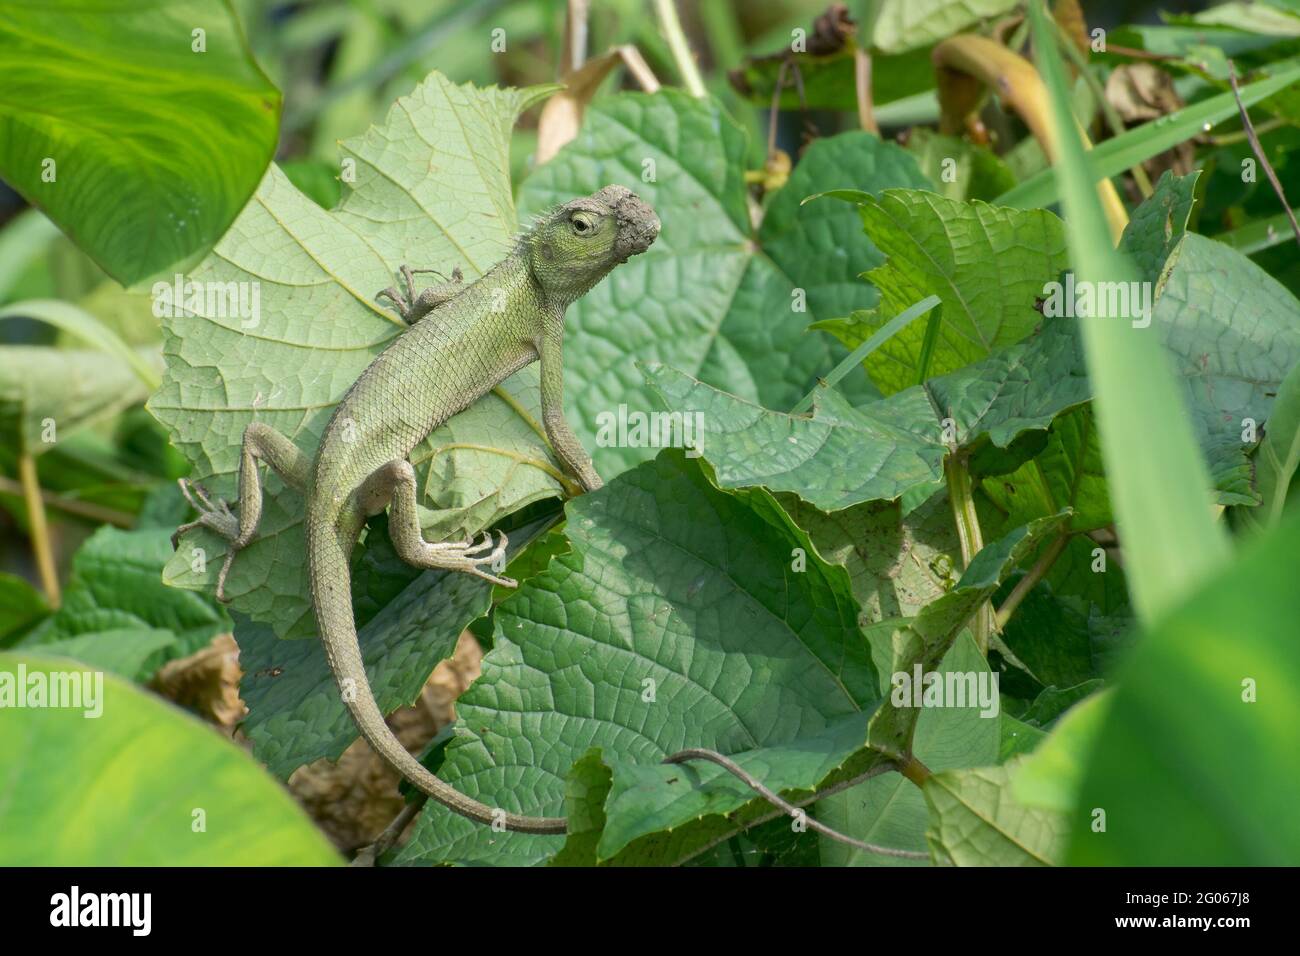 Indian gecko inside a bush looking out , green foliage background, morning light , Kolkata, India - nature stock photograph Stock Photo